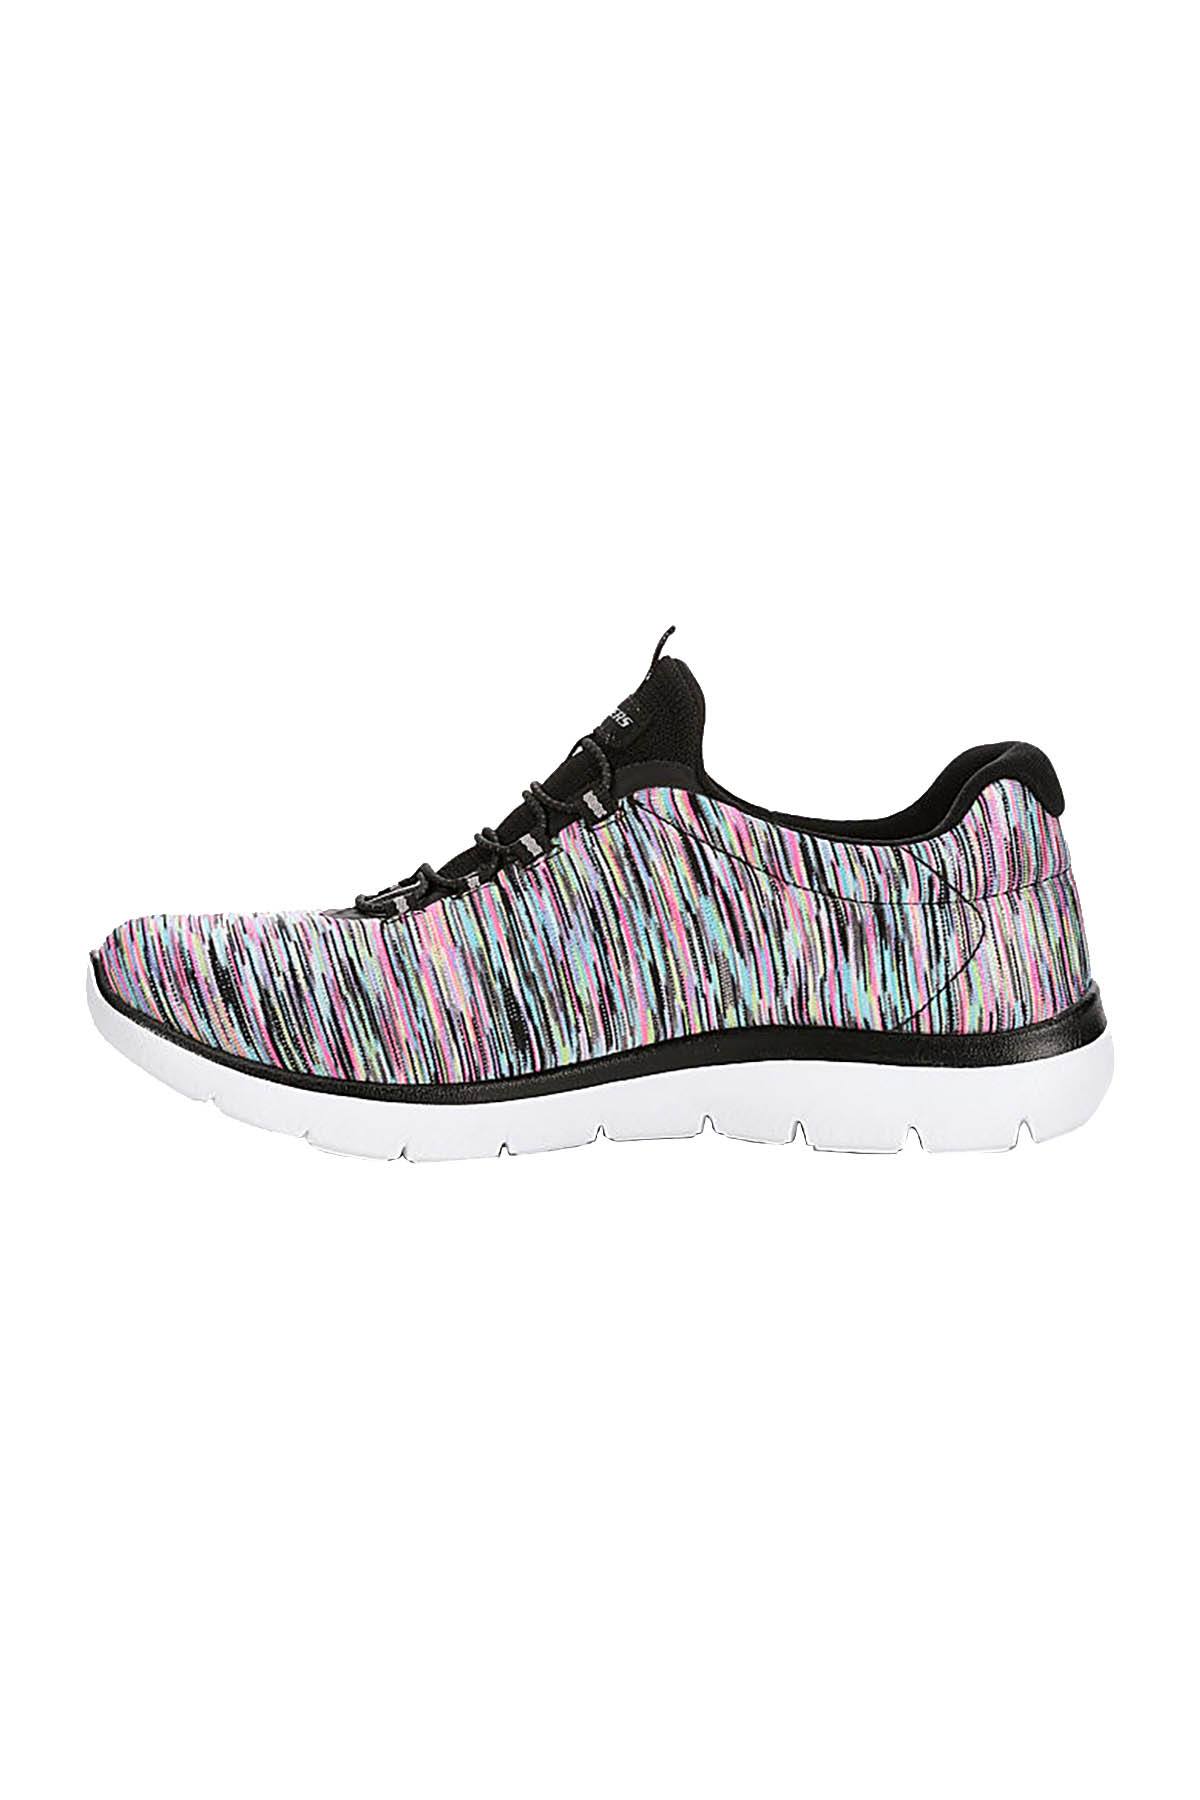 Sketchers Black/Pink Summits Light-Dreaming Wide-Width Athletic Sneakers